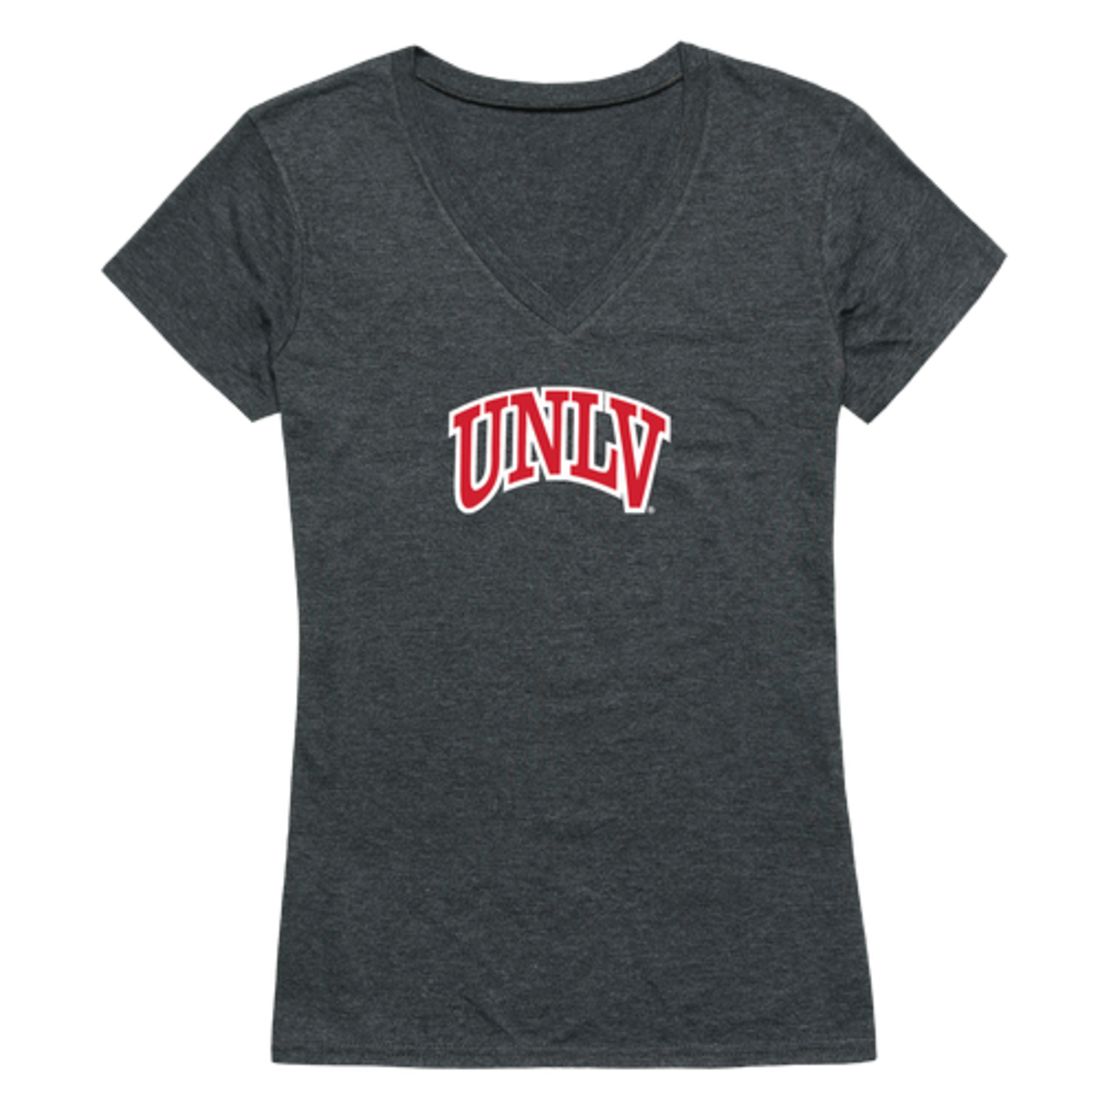 UNLV University of Nevada Las Vegas Rebels Womens Cinder T-Shirt